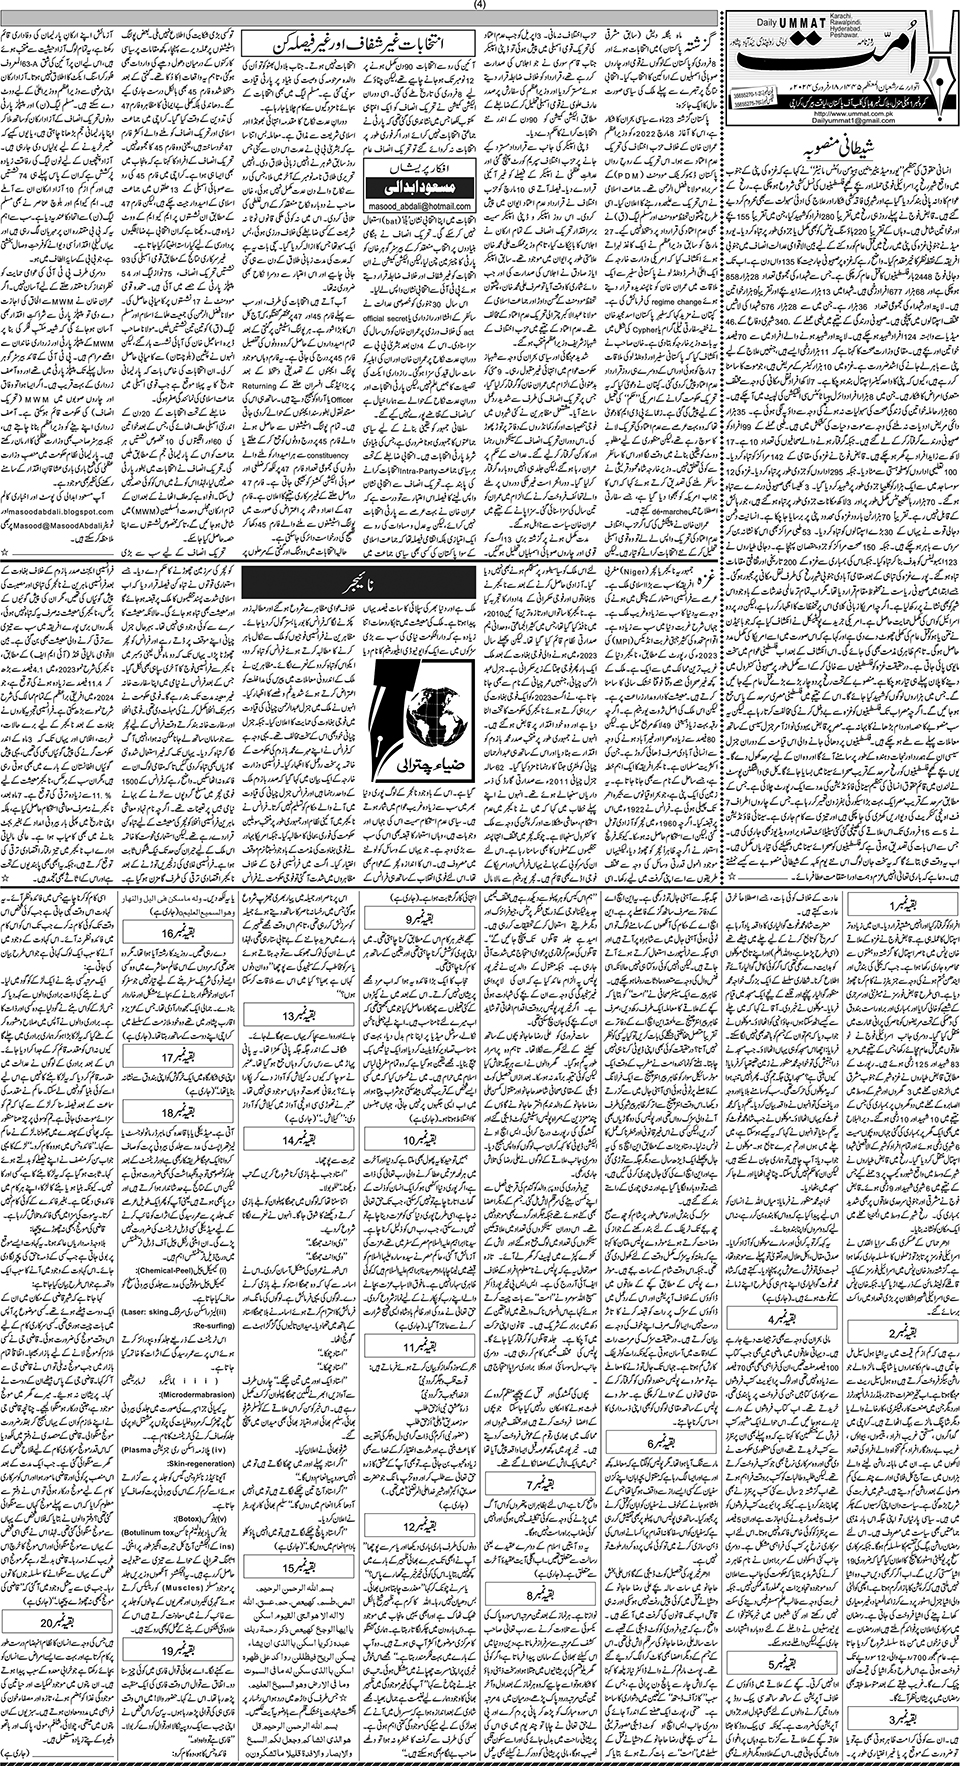 Ummat Epaper - KHI - KHI_PAGE04